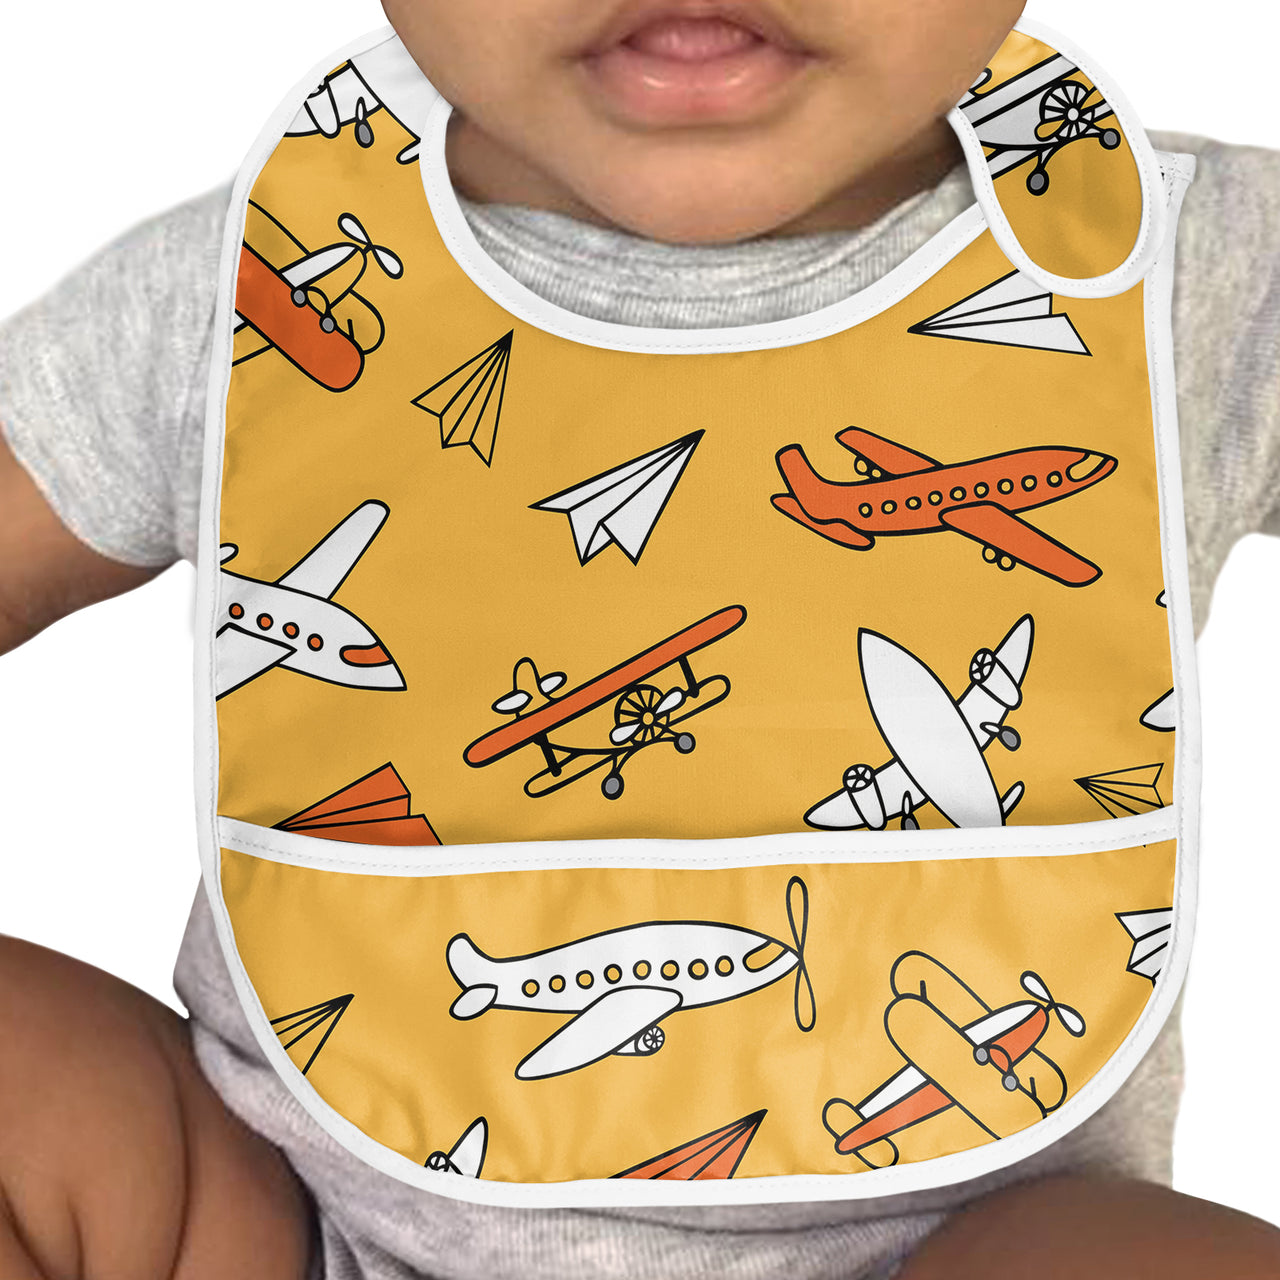 Super Drawings of Airplanes Designed Baby Bib